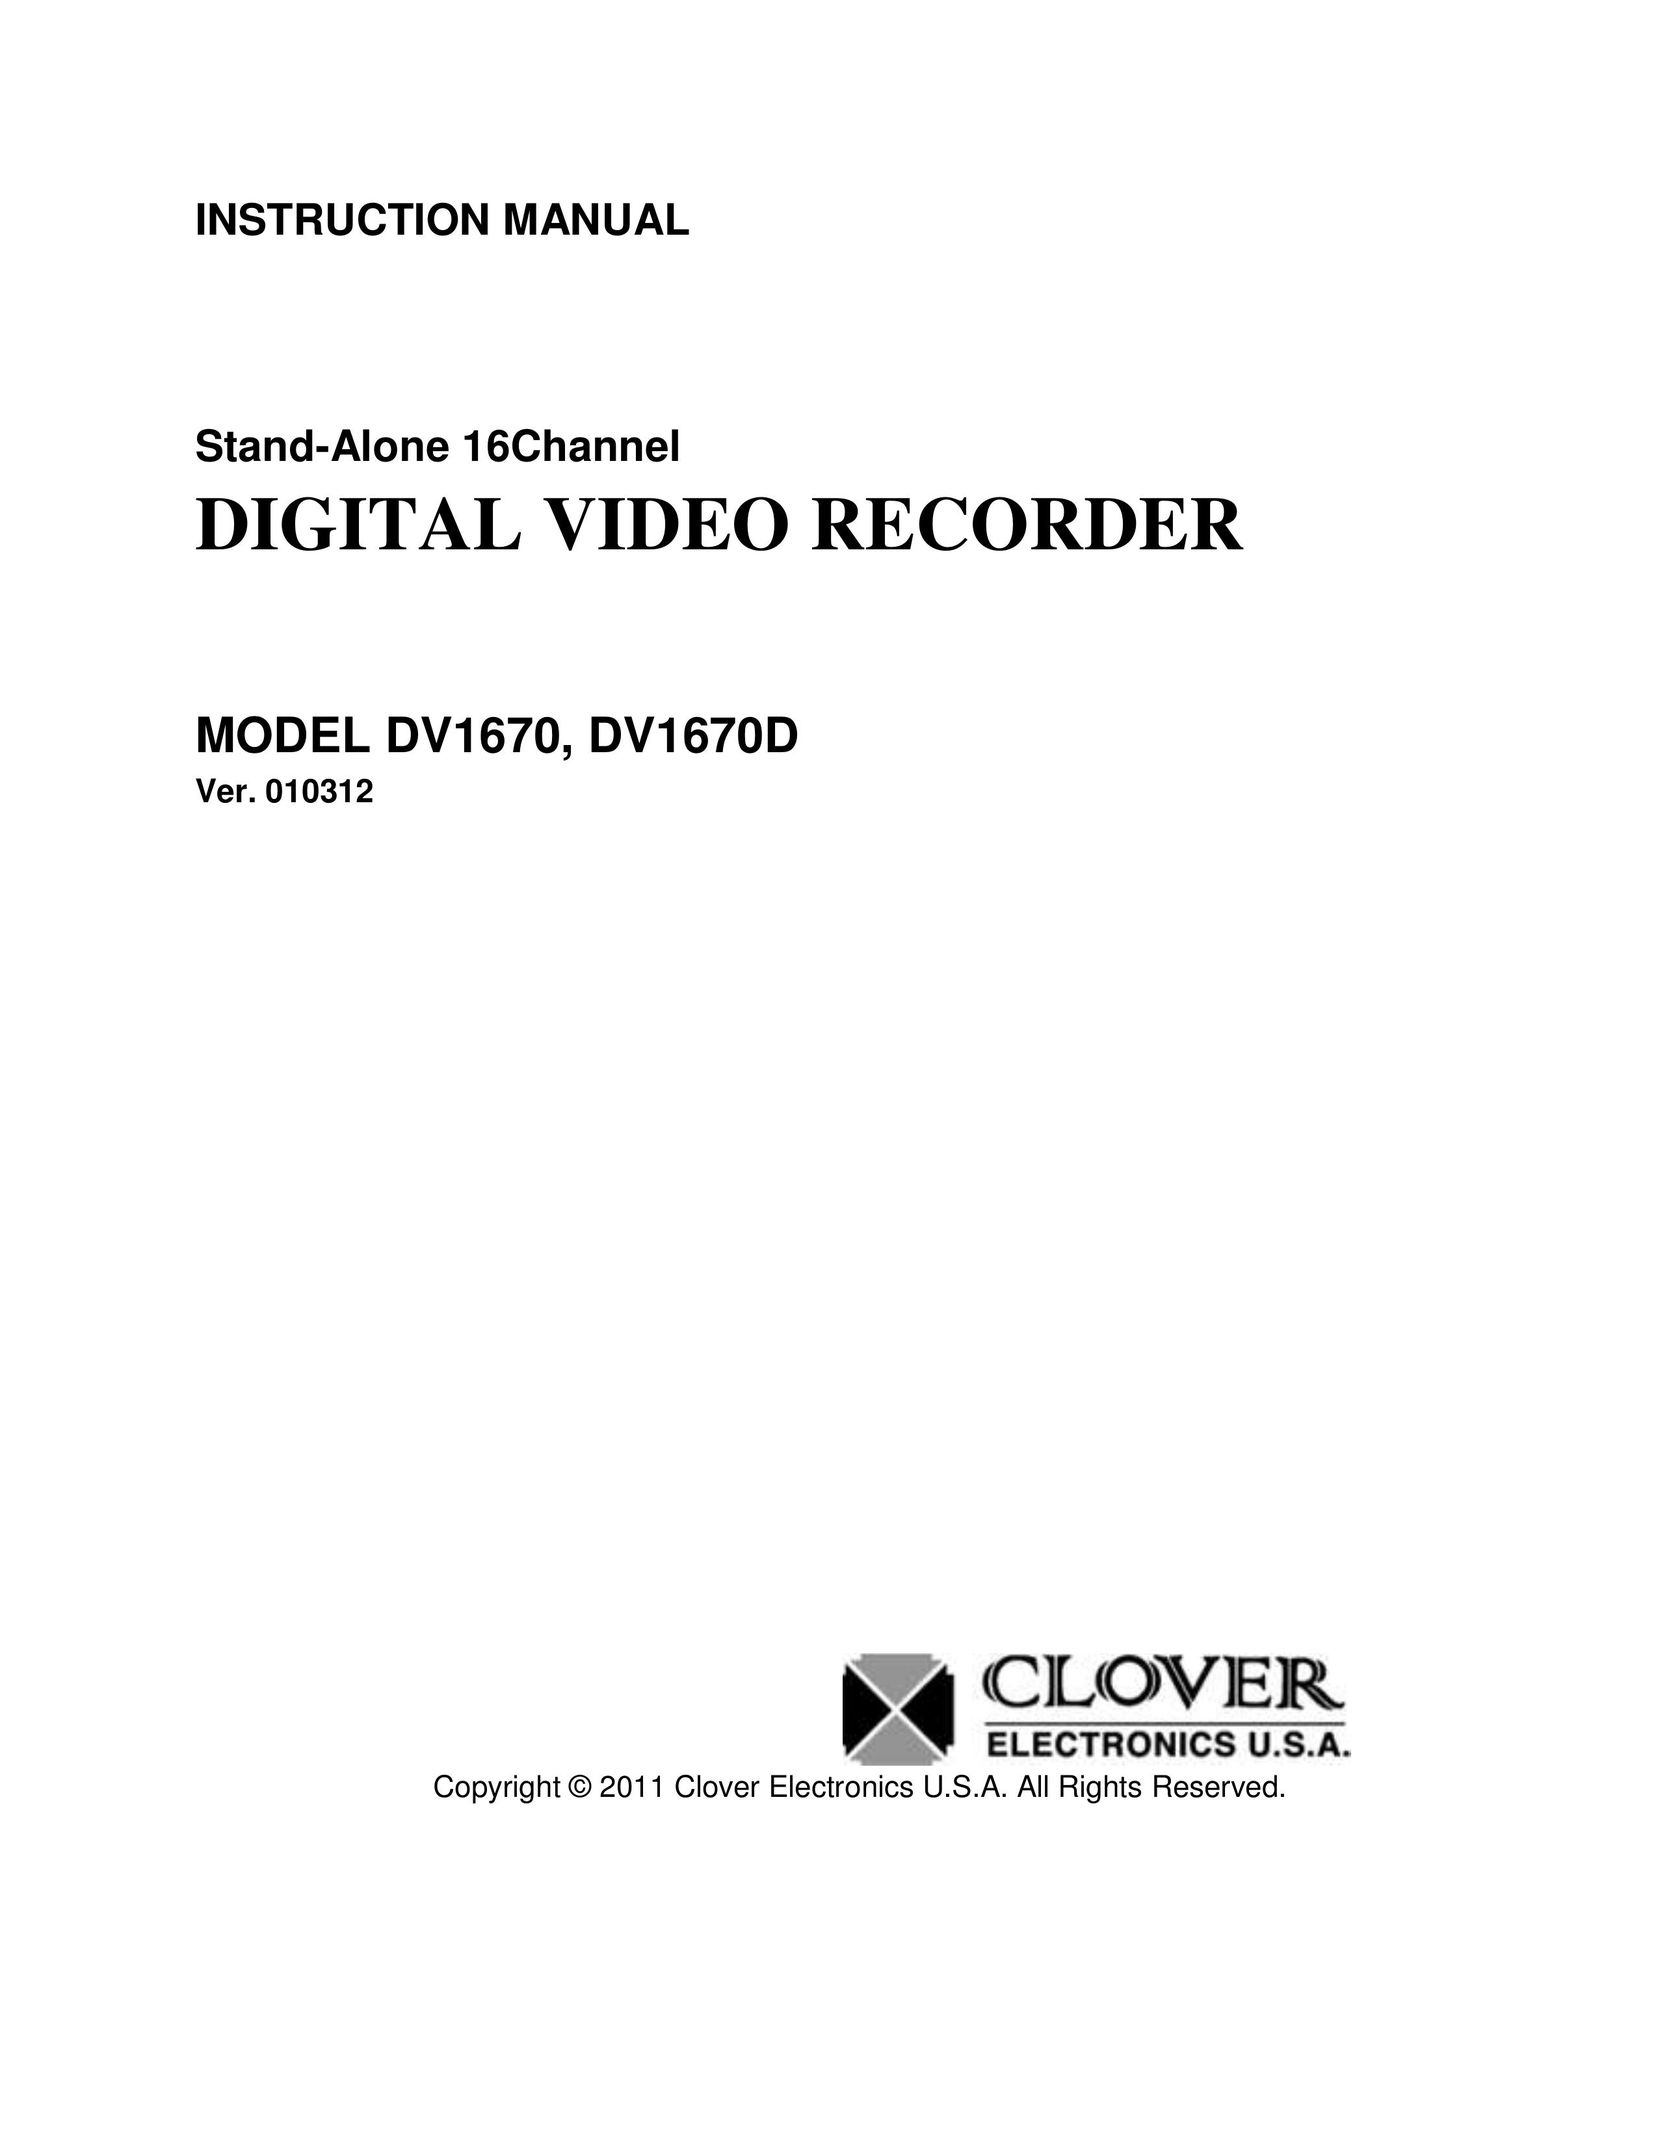 Clover Electronics DV1670D DVR User Manual